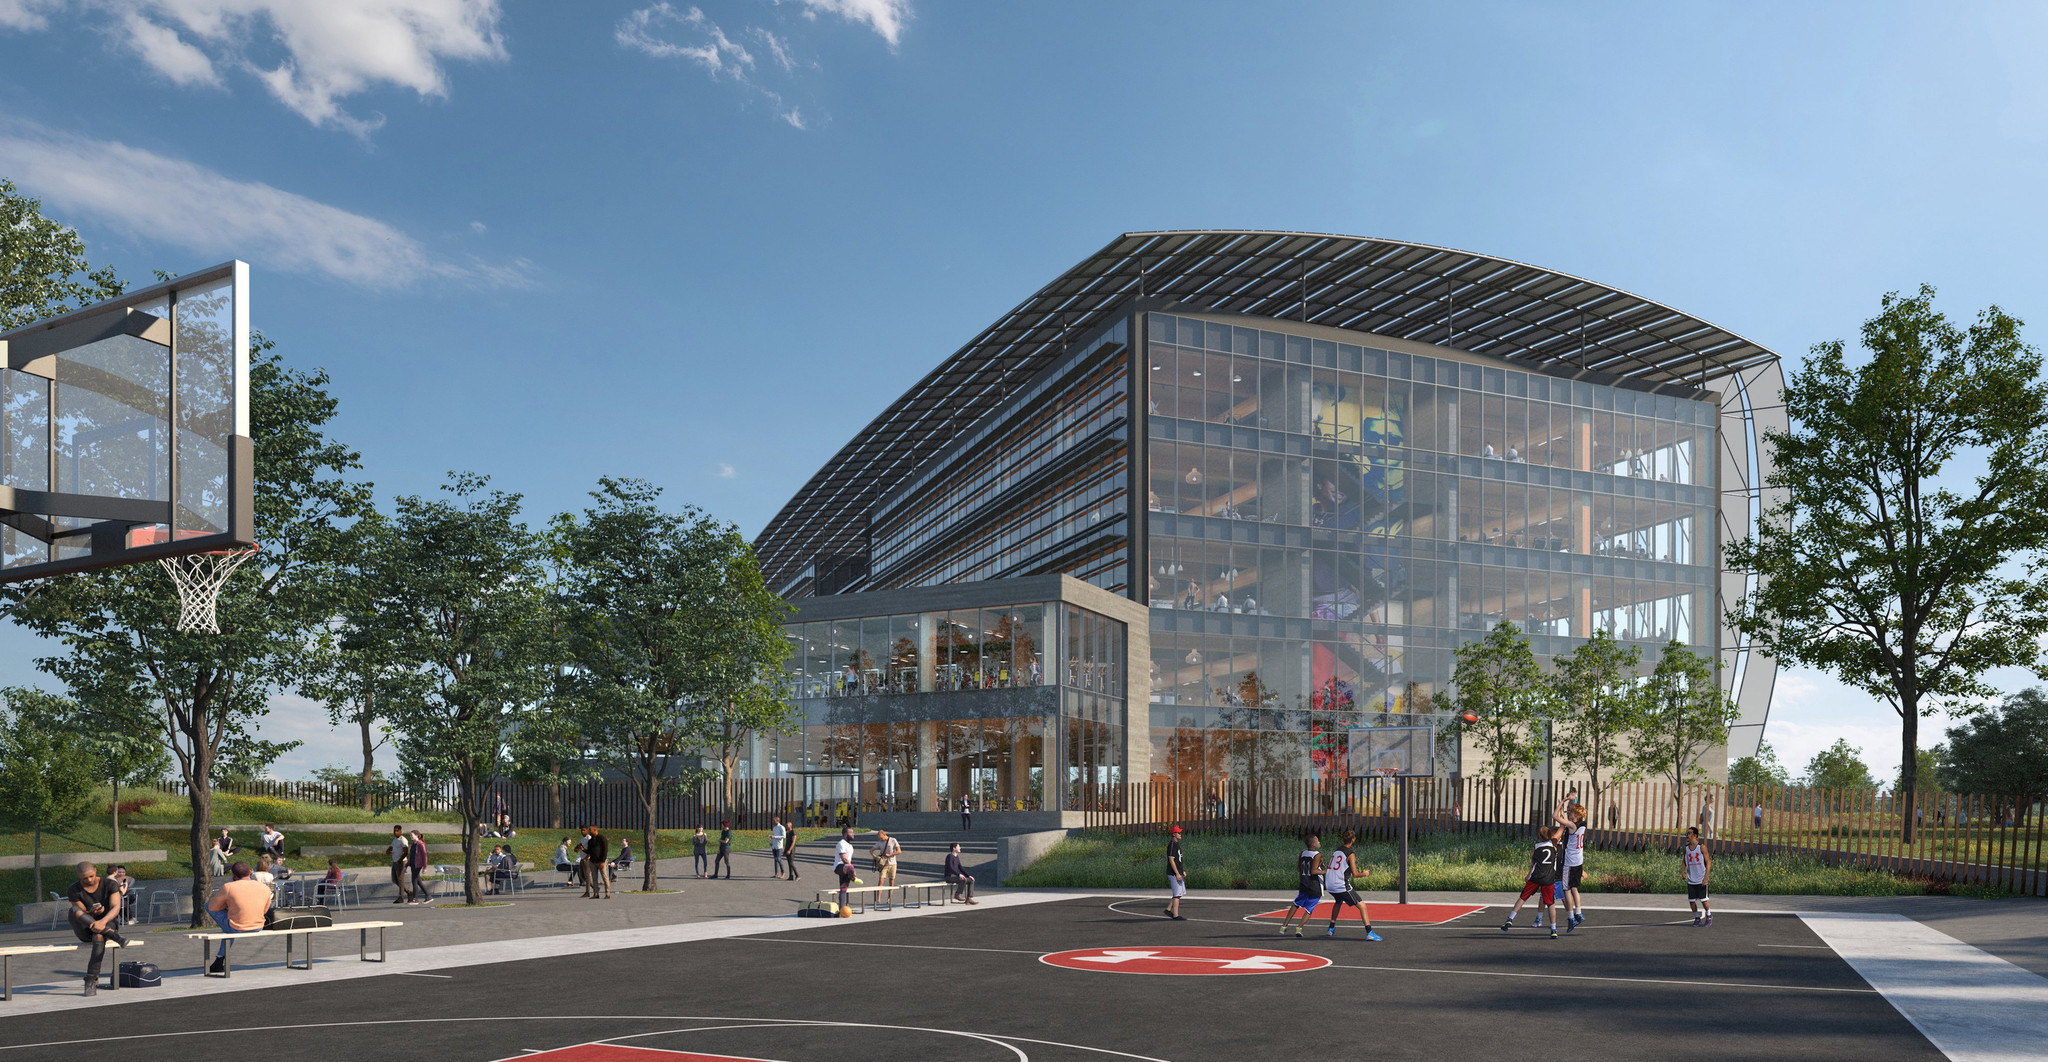 Under Armour reveals modern, stadium-like design for headquarters in Port Covington Baltimore